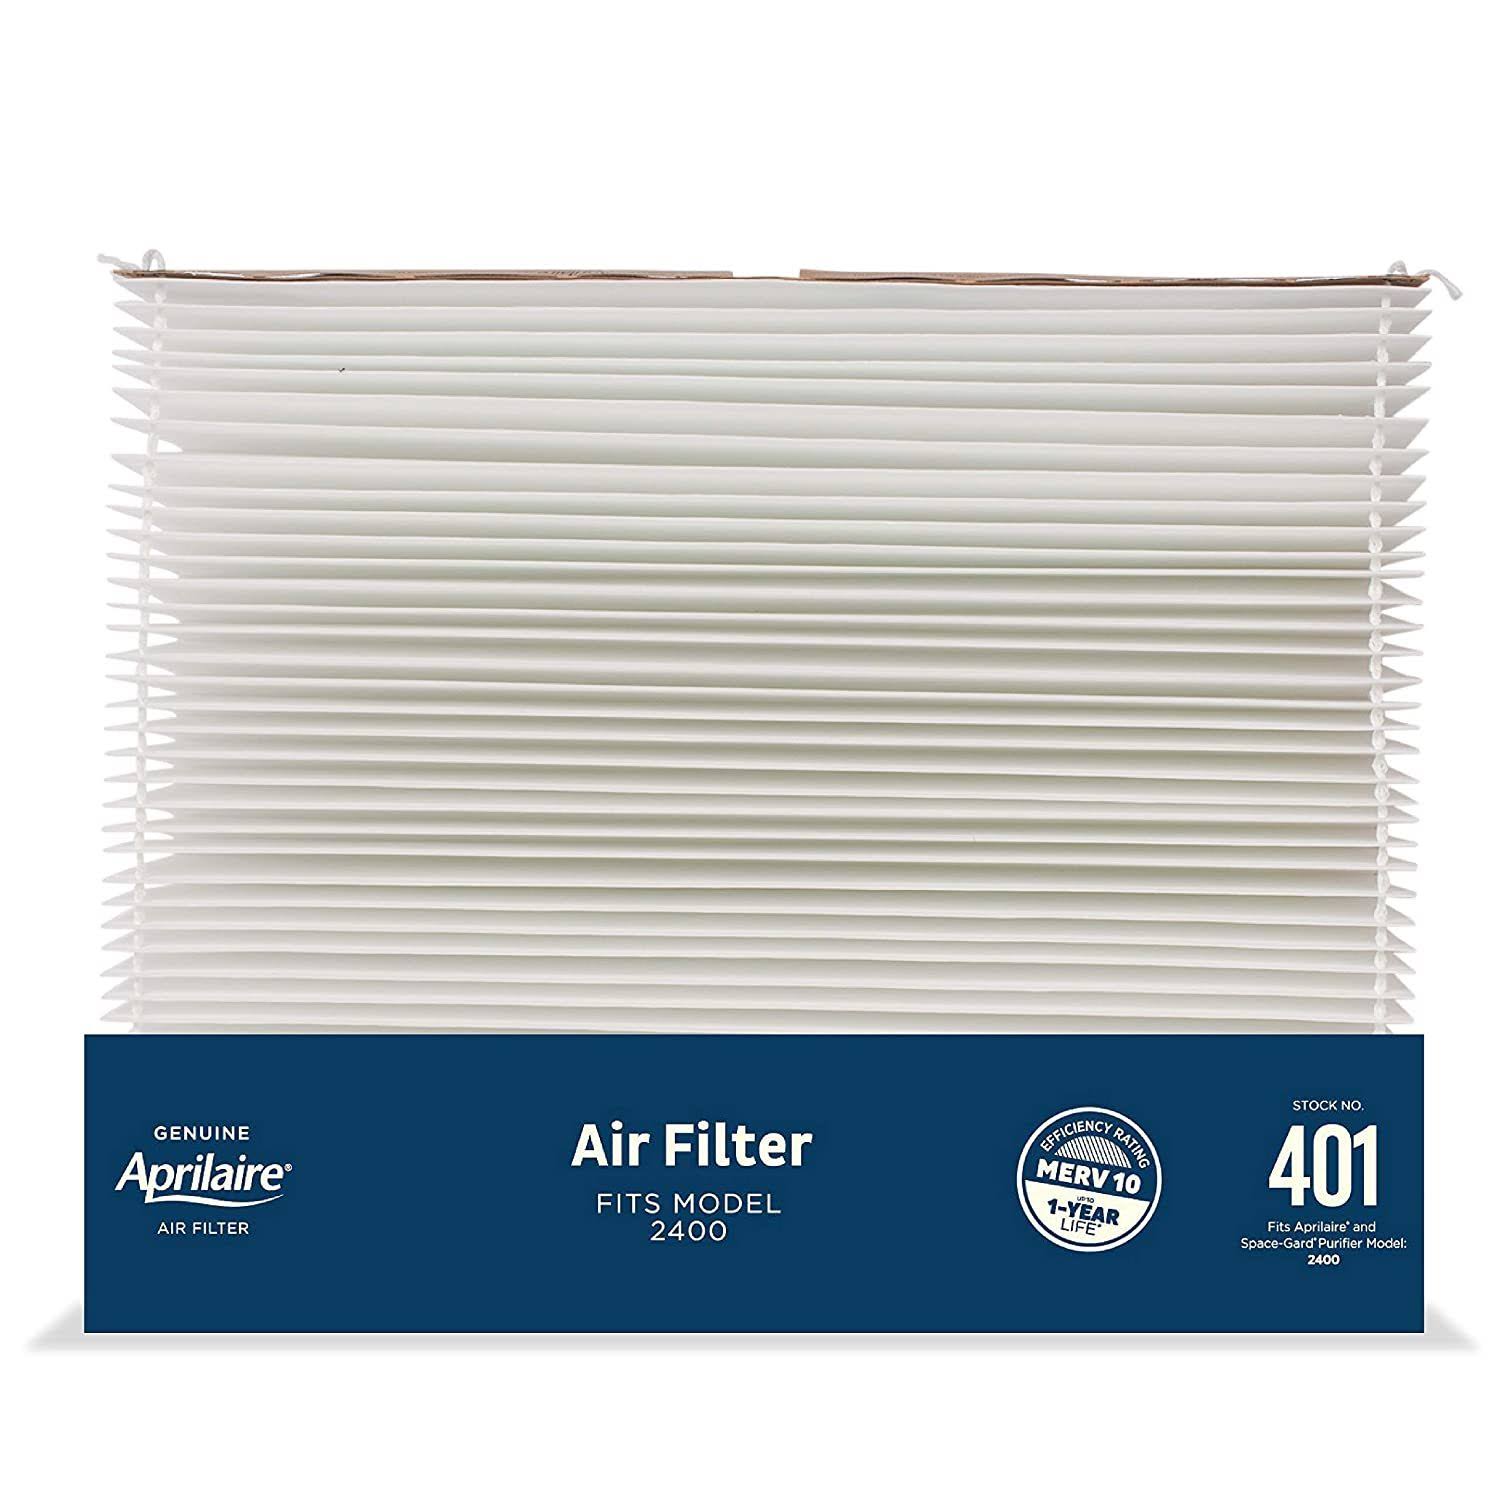 Aprilaire 401 Air Filter Replacement